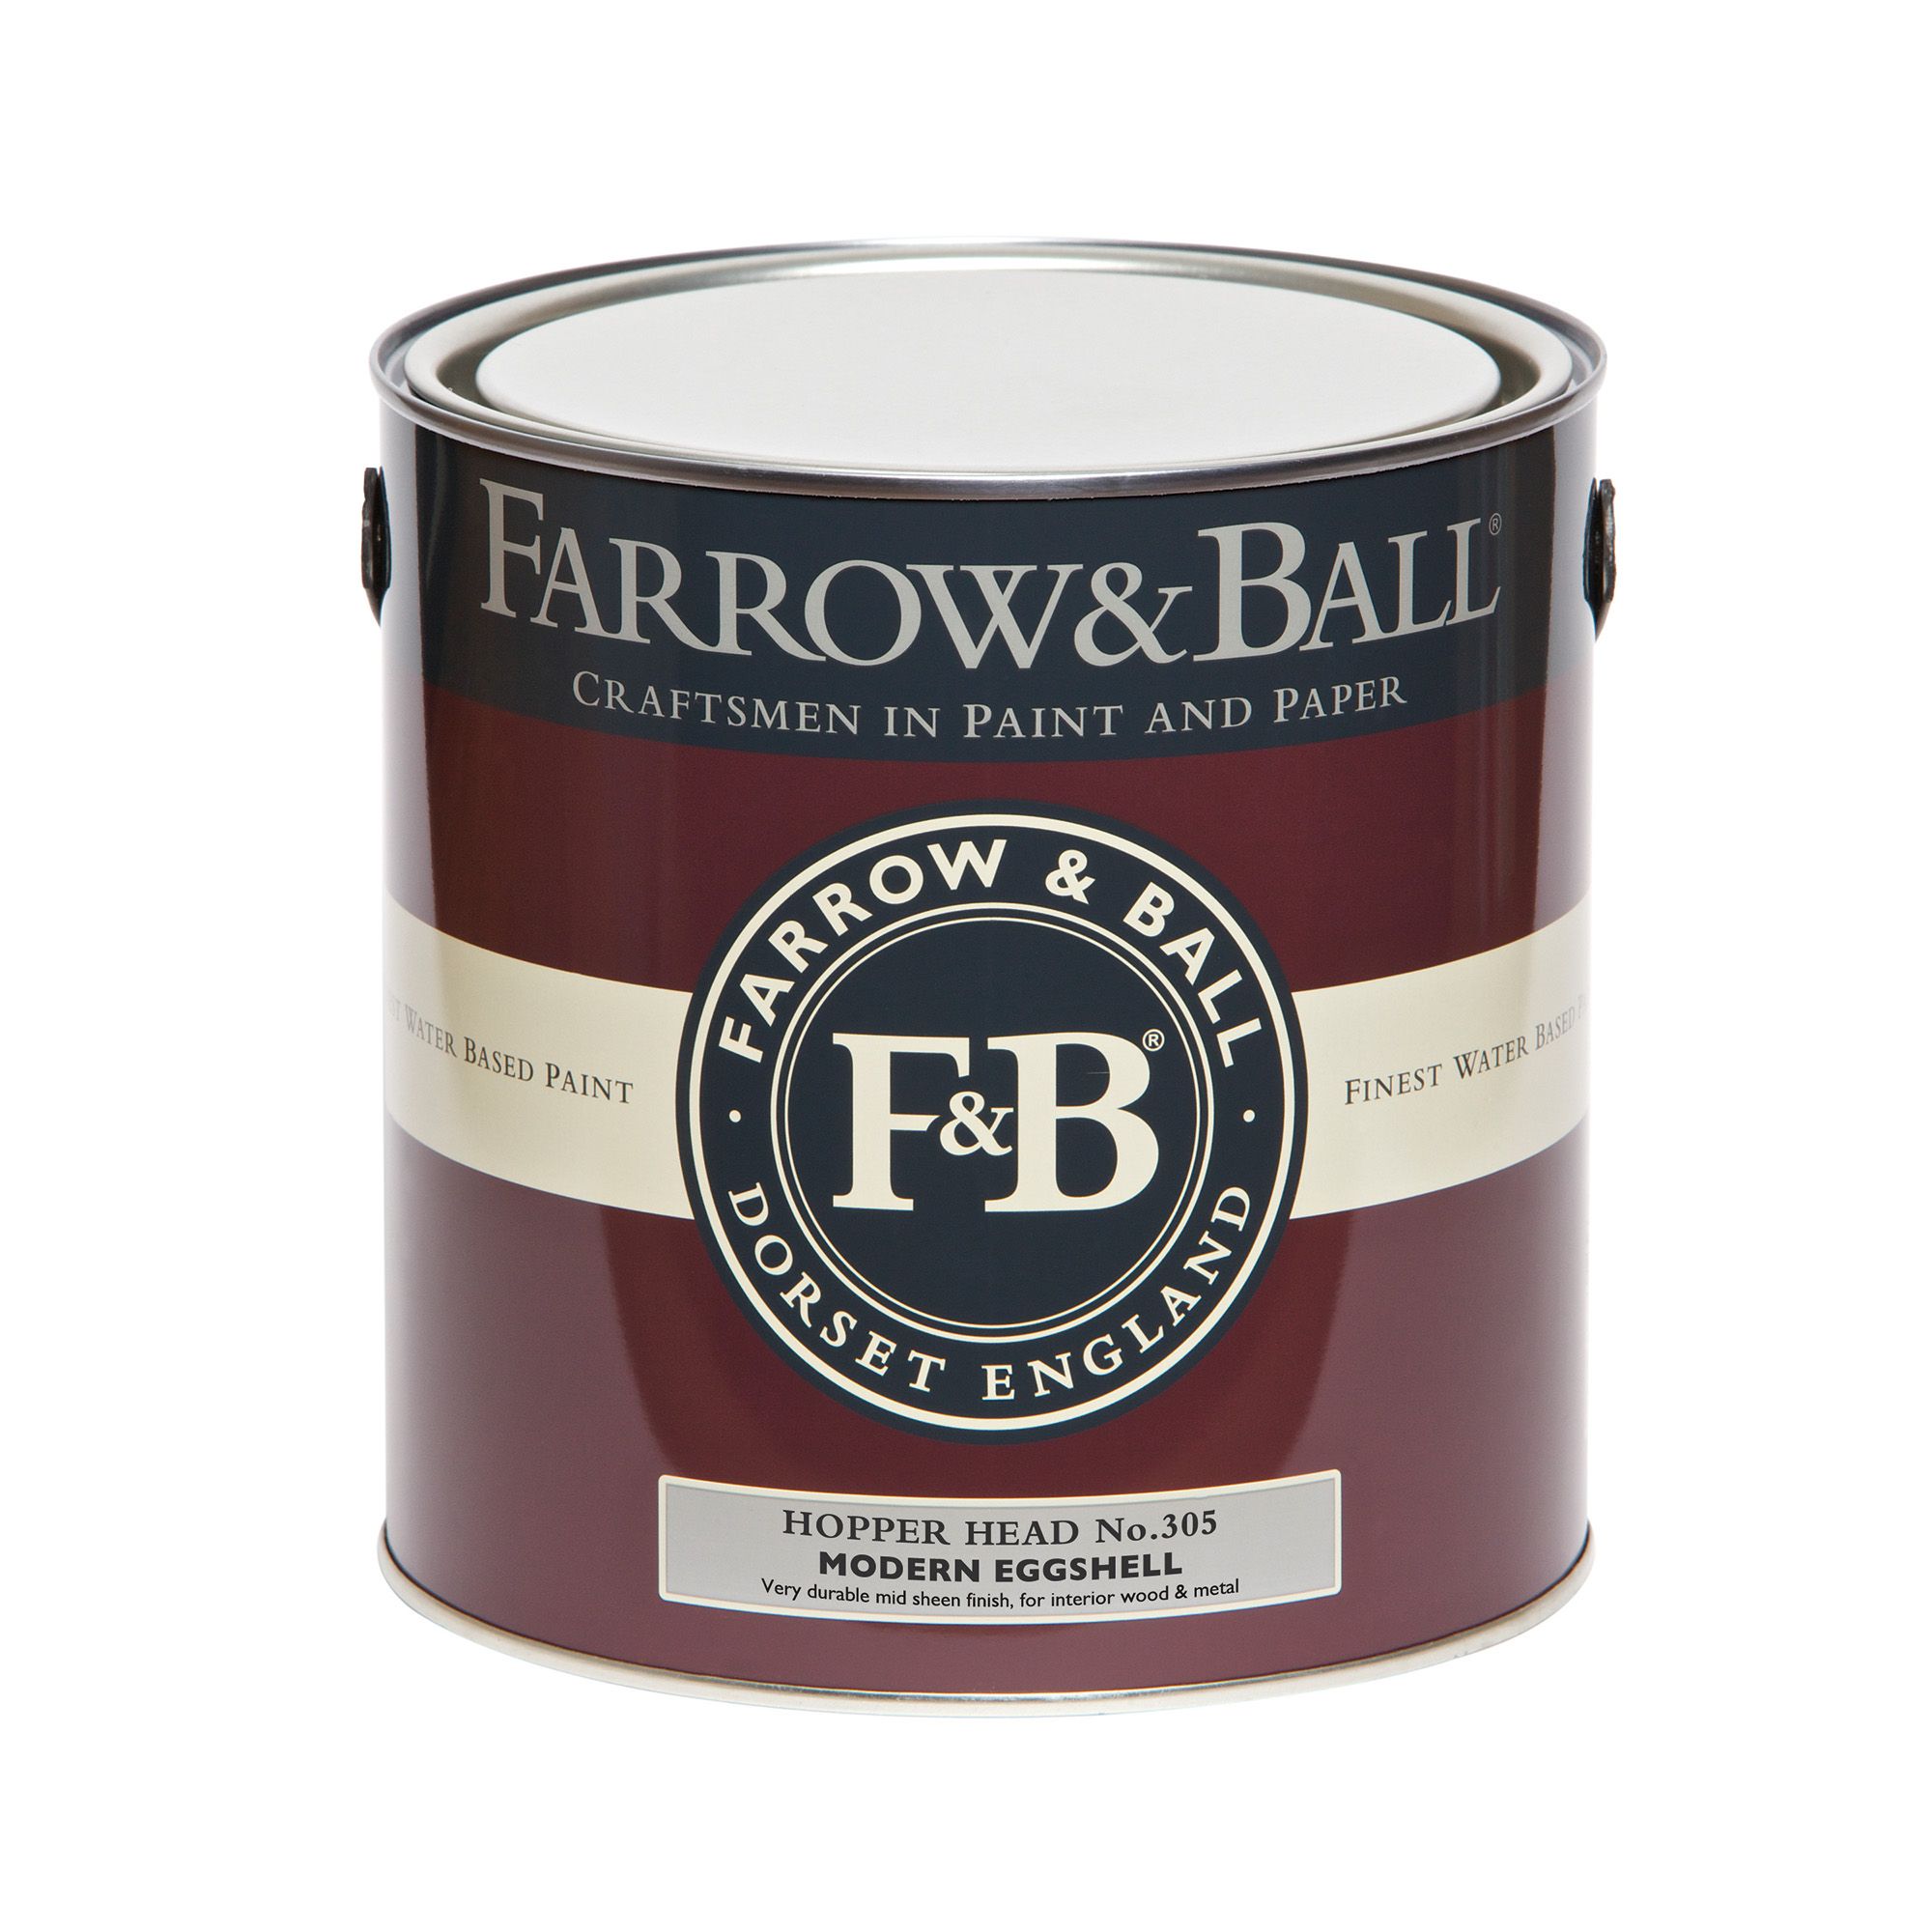 Farrow & Ball Modern Hopper Head No.305 Eggshell Paint, 2.5L